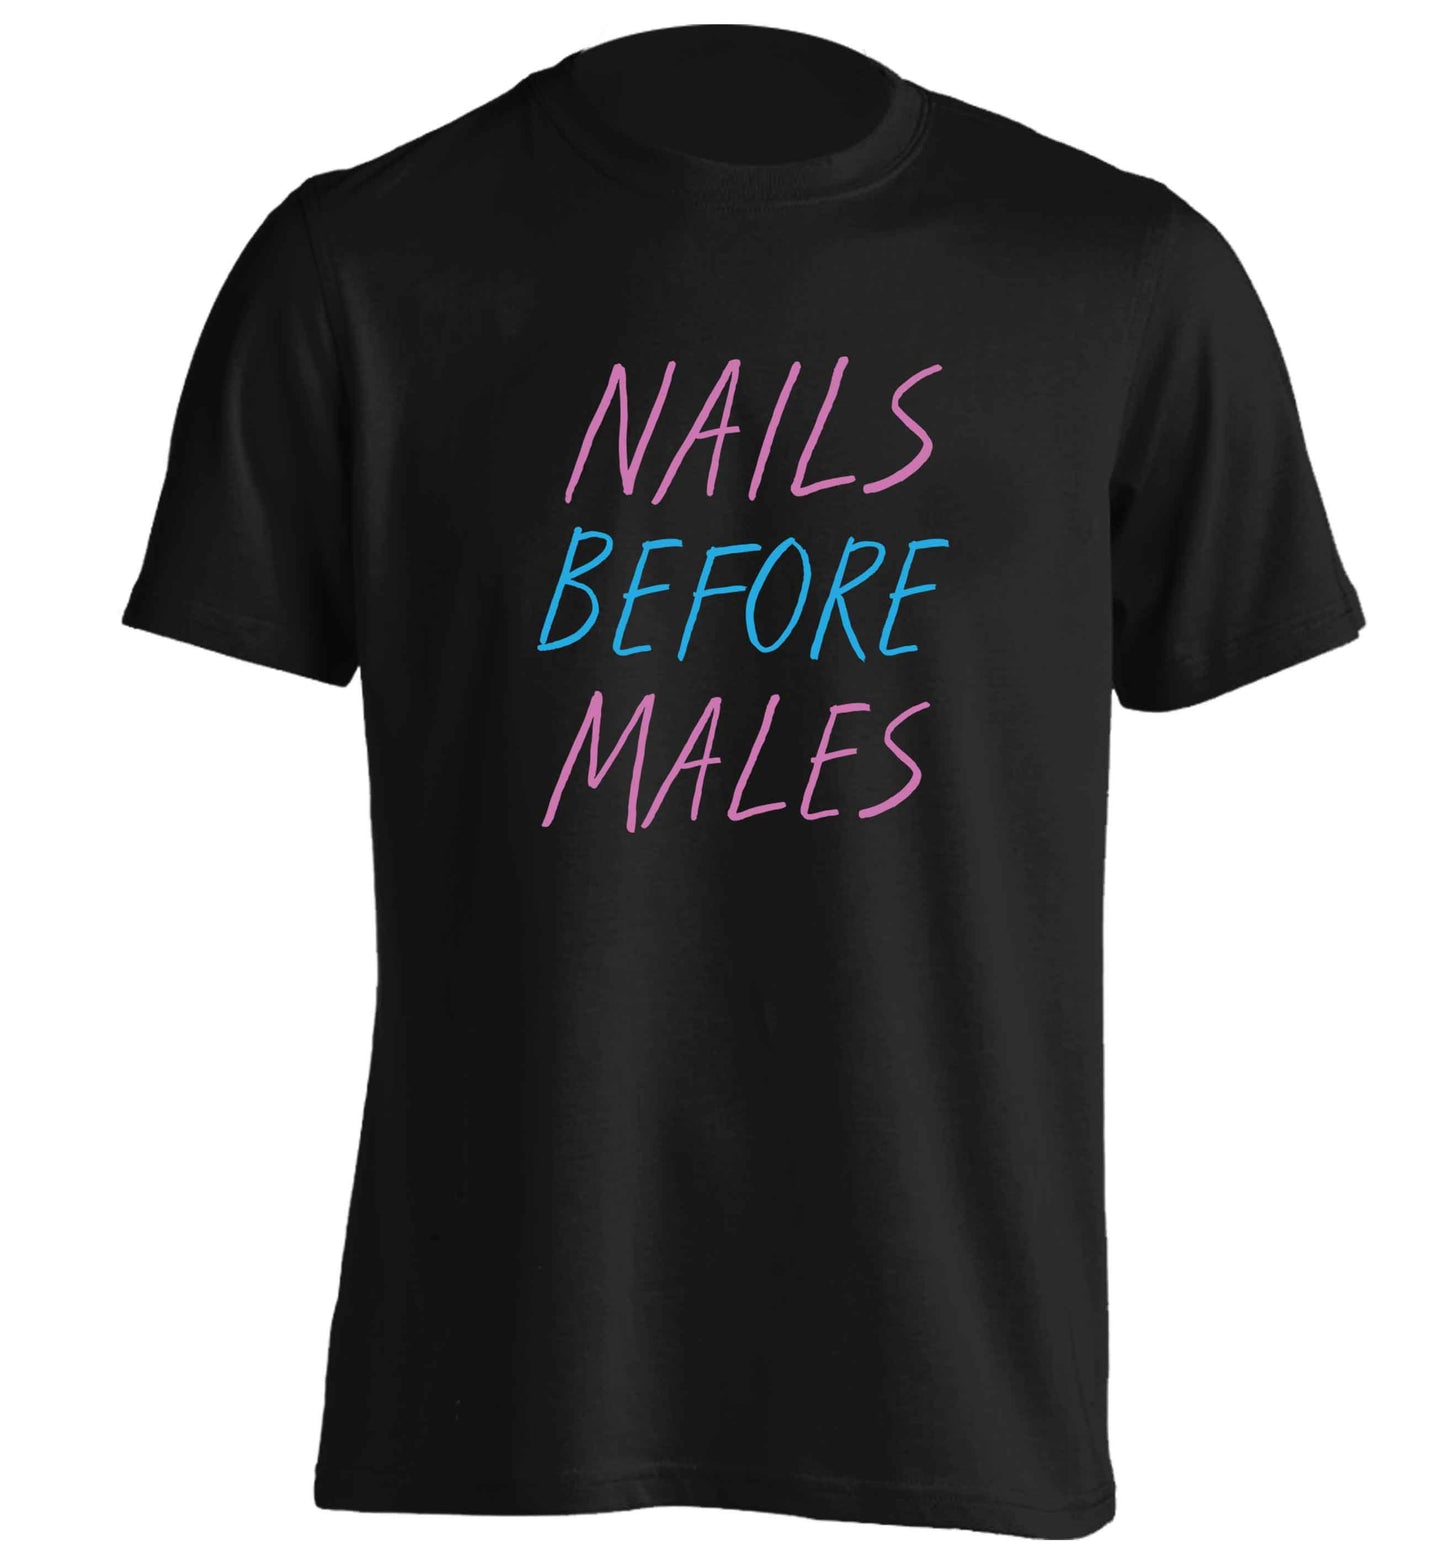 Nails before males adults unisex black Tshirt 2XL